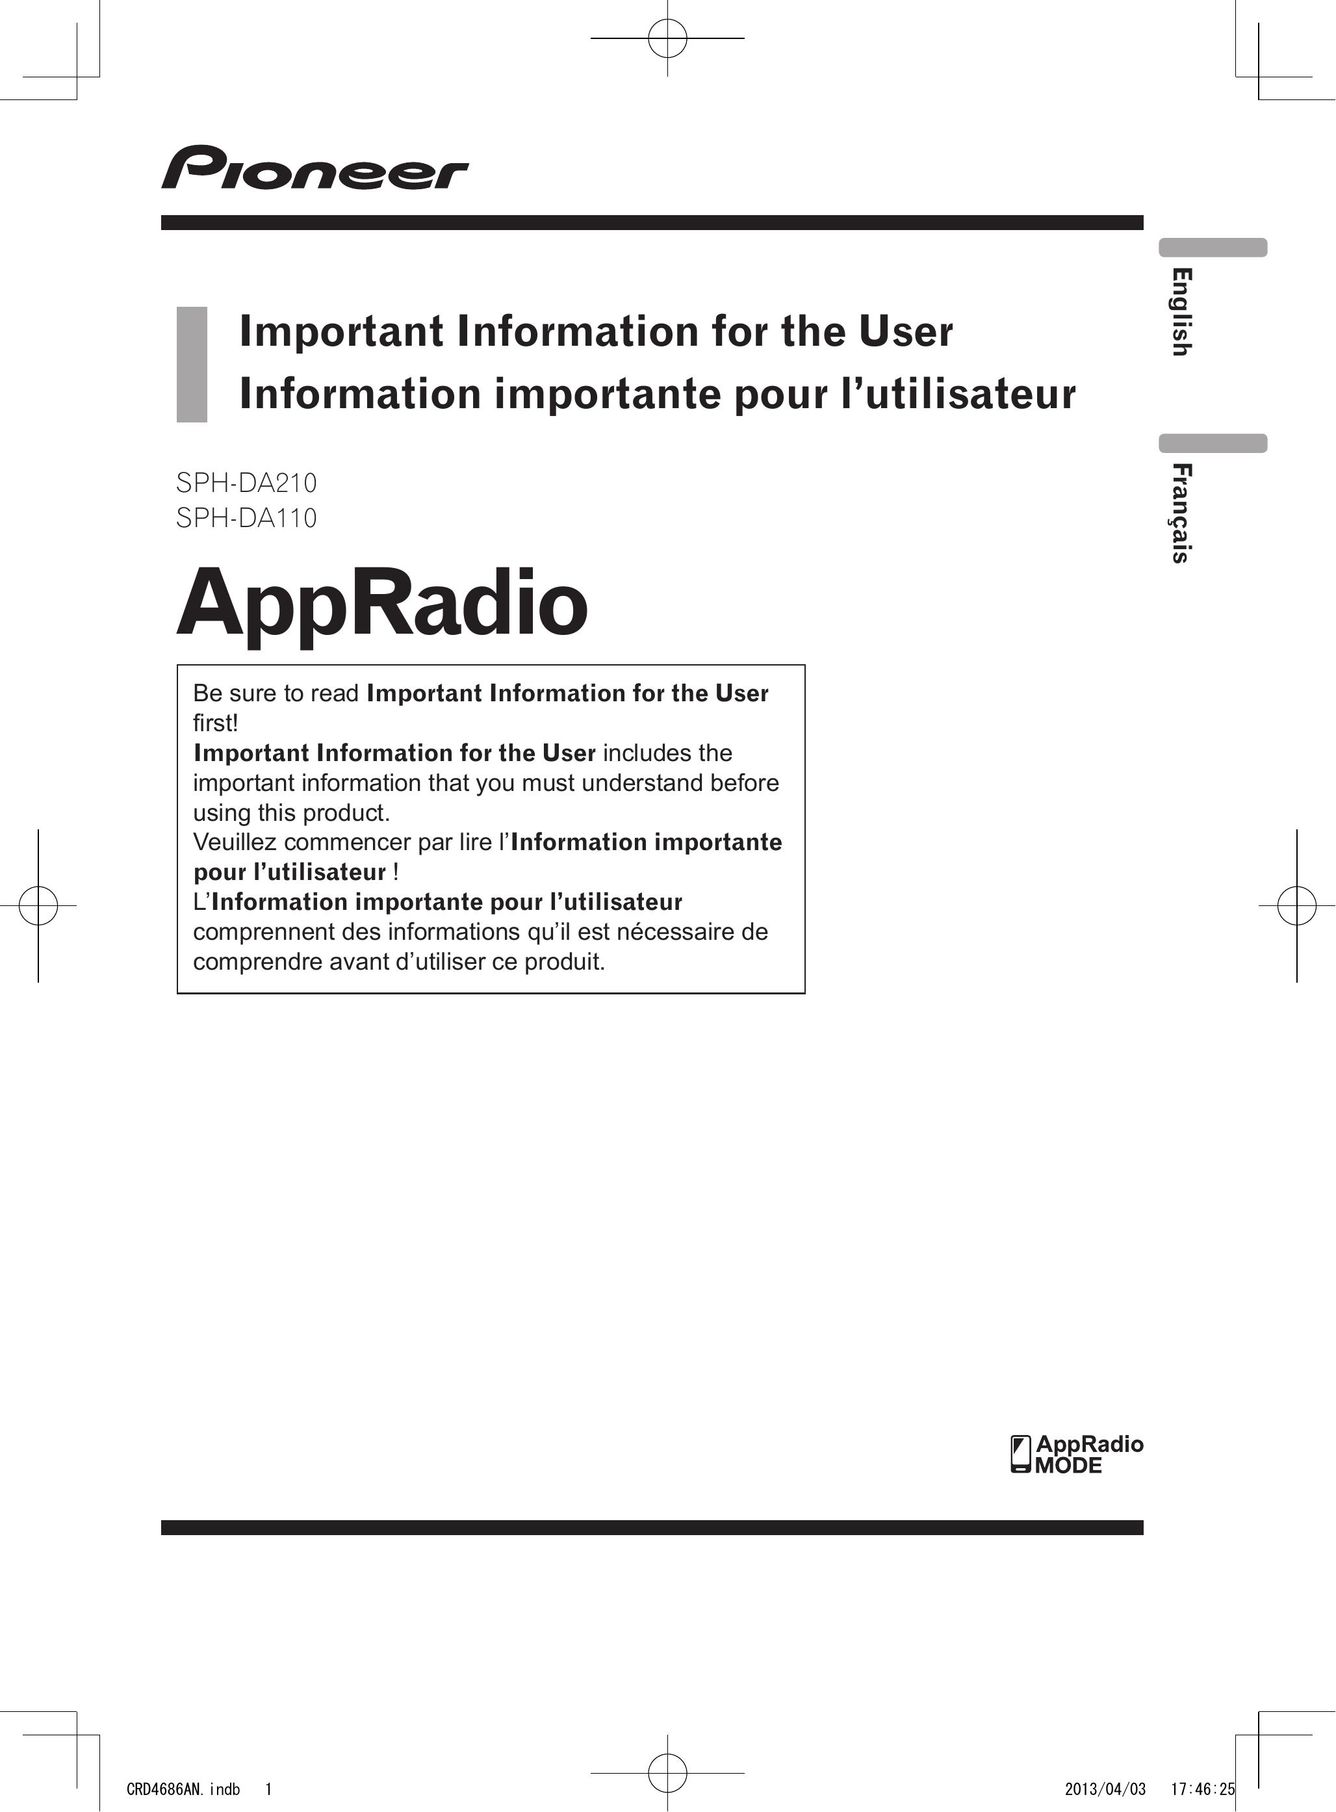 Pioneer SPH-DA210 Radio User Manual